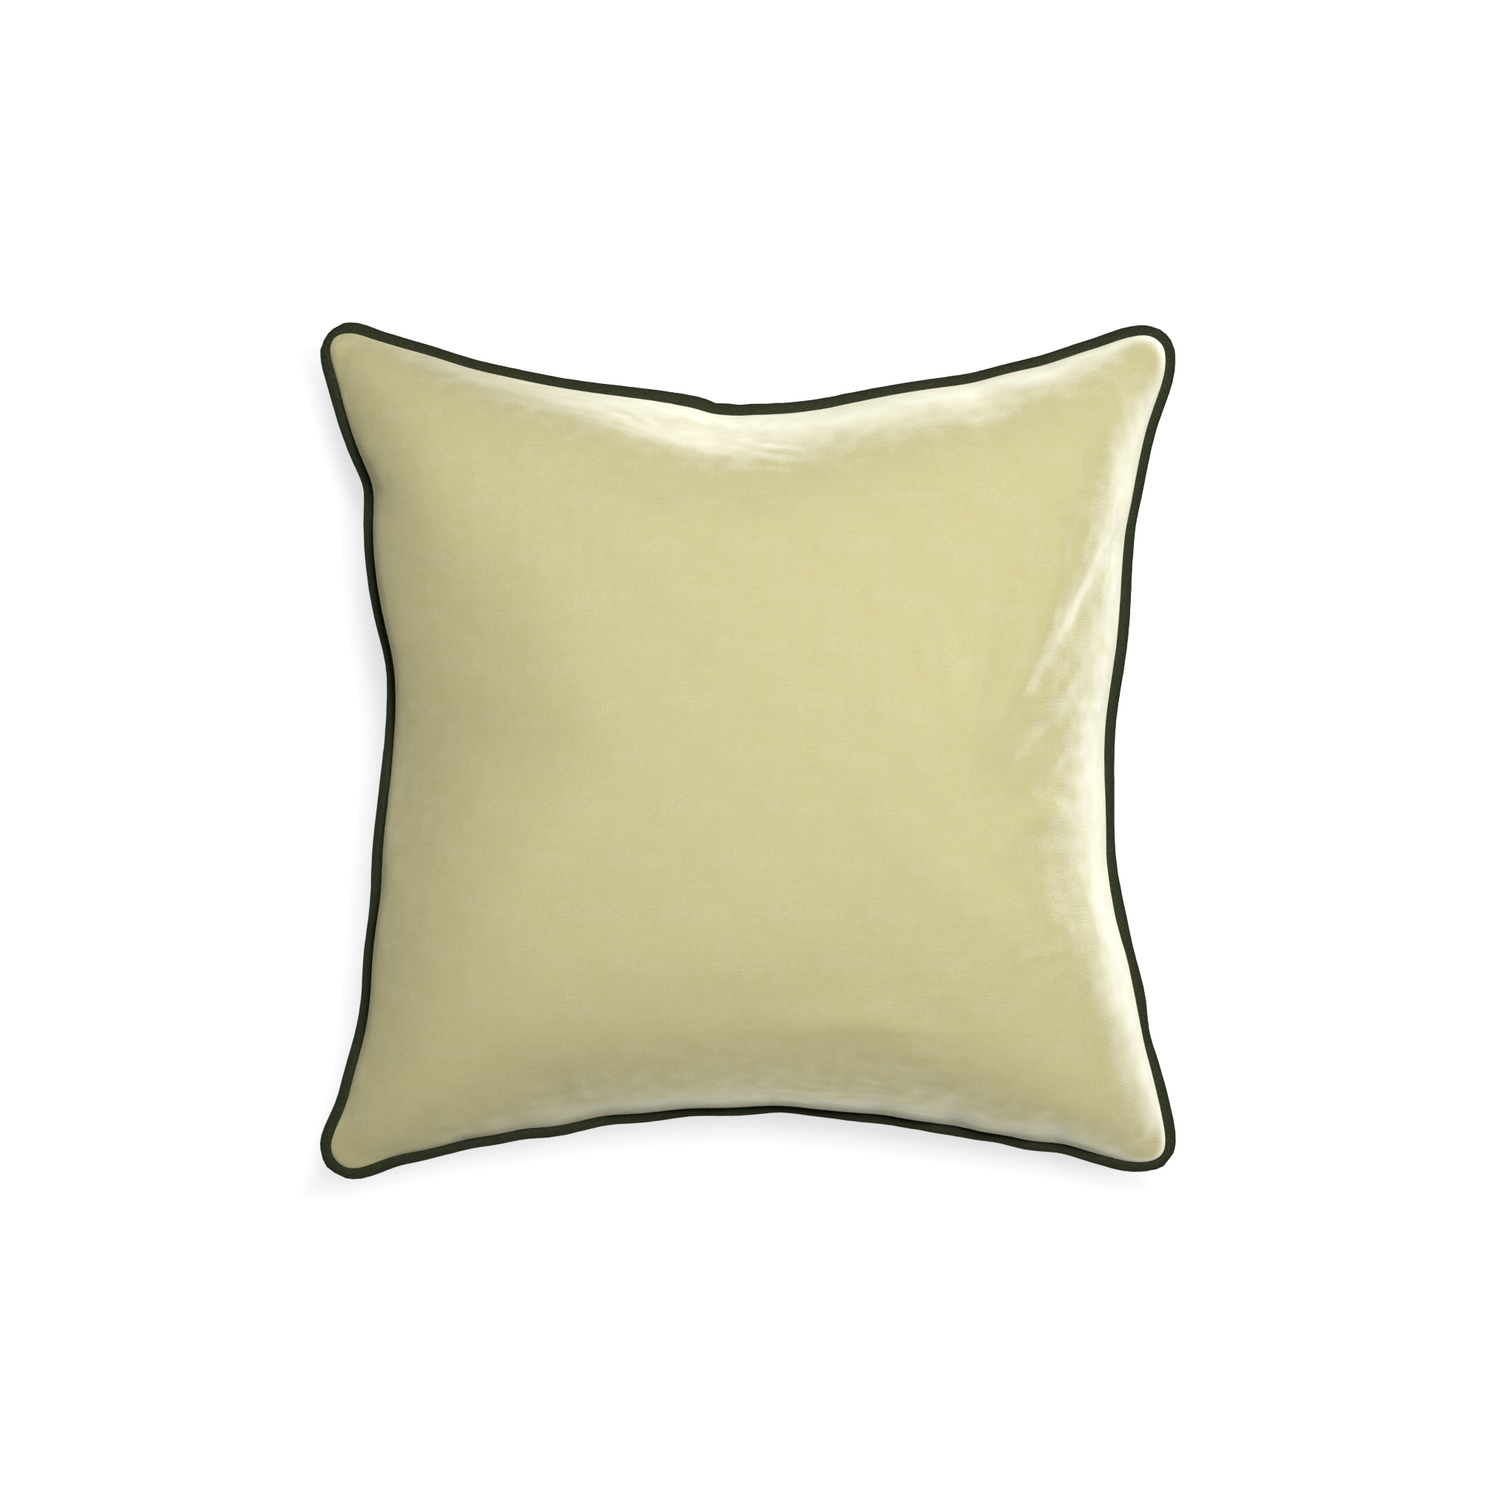 square light green velvet pillow with fern green piping